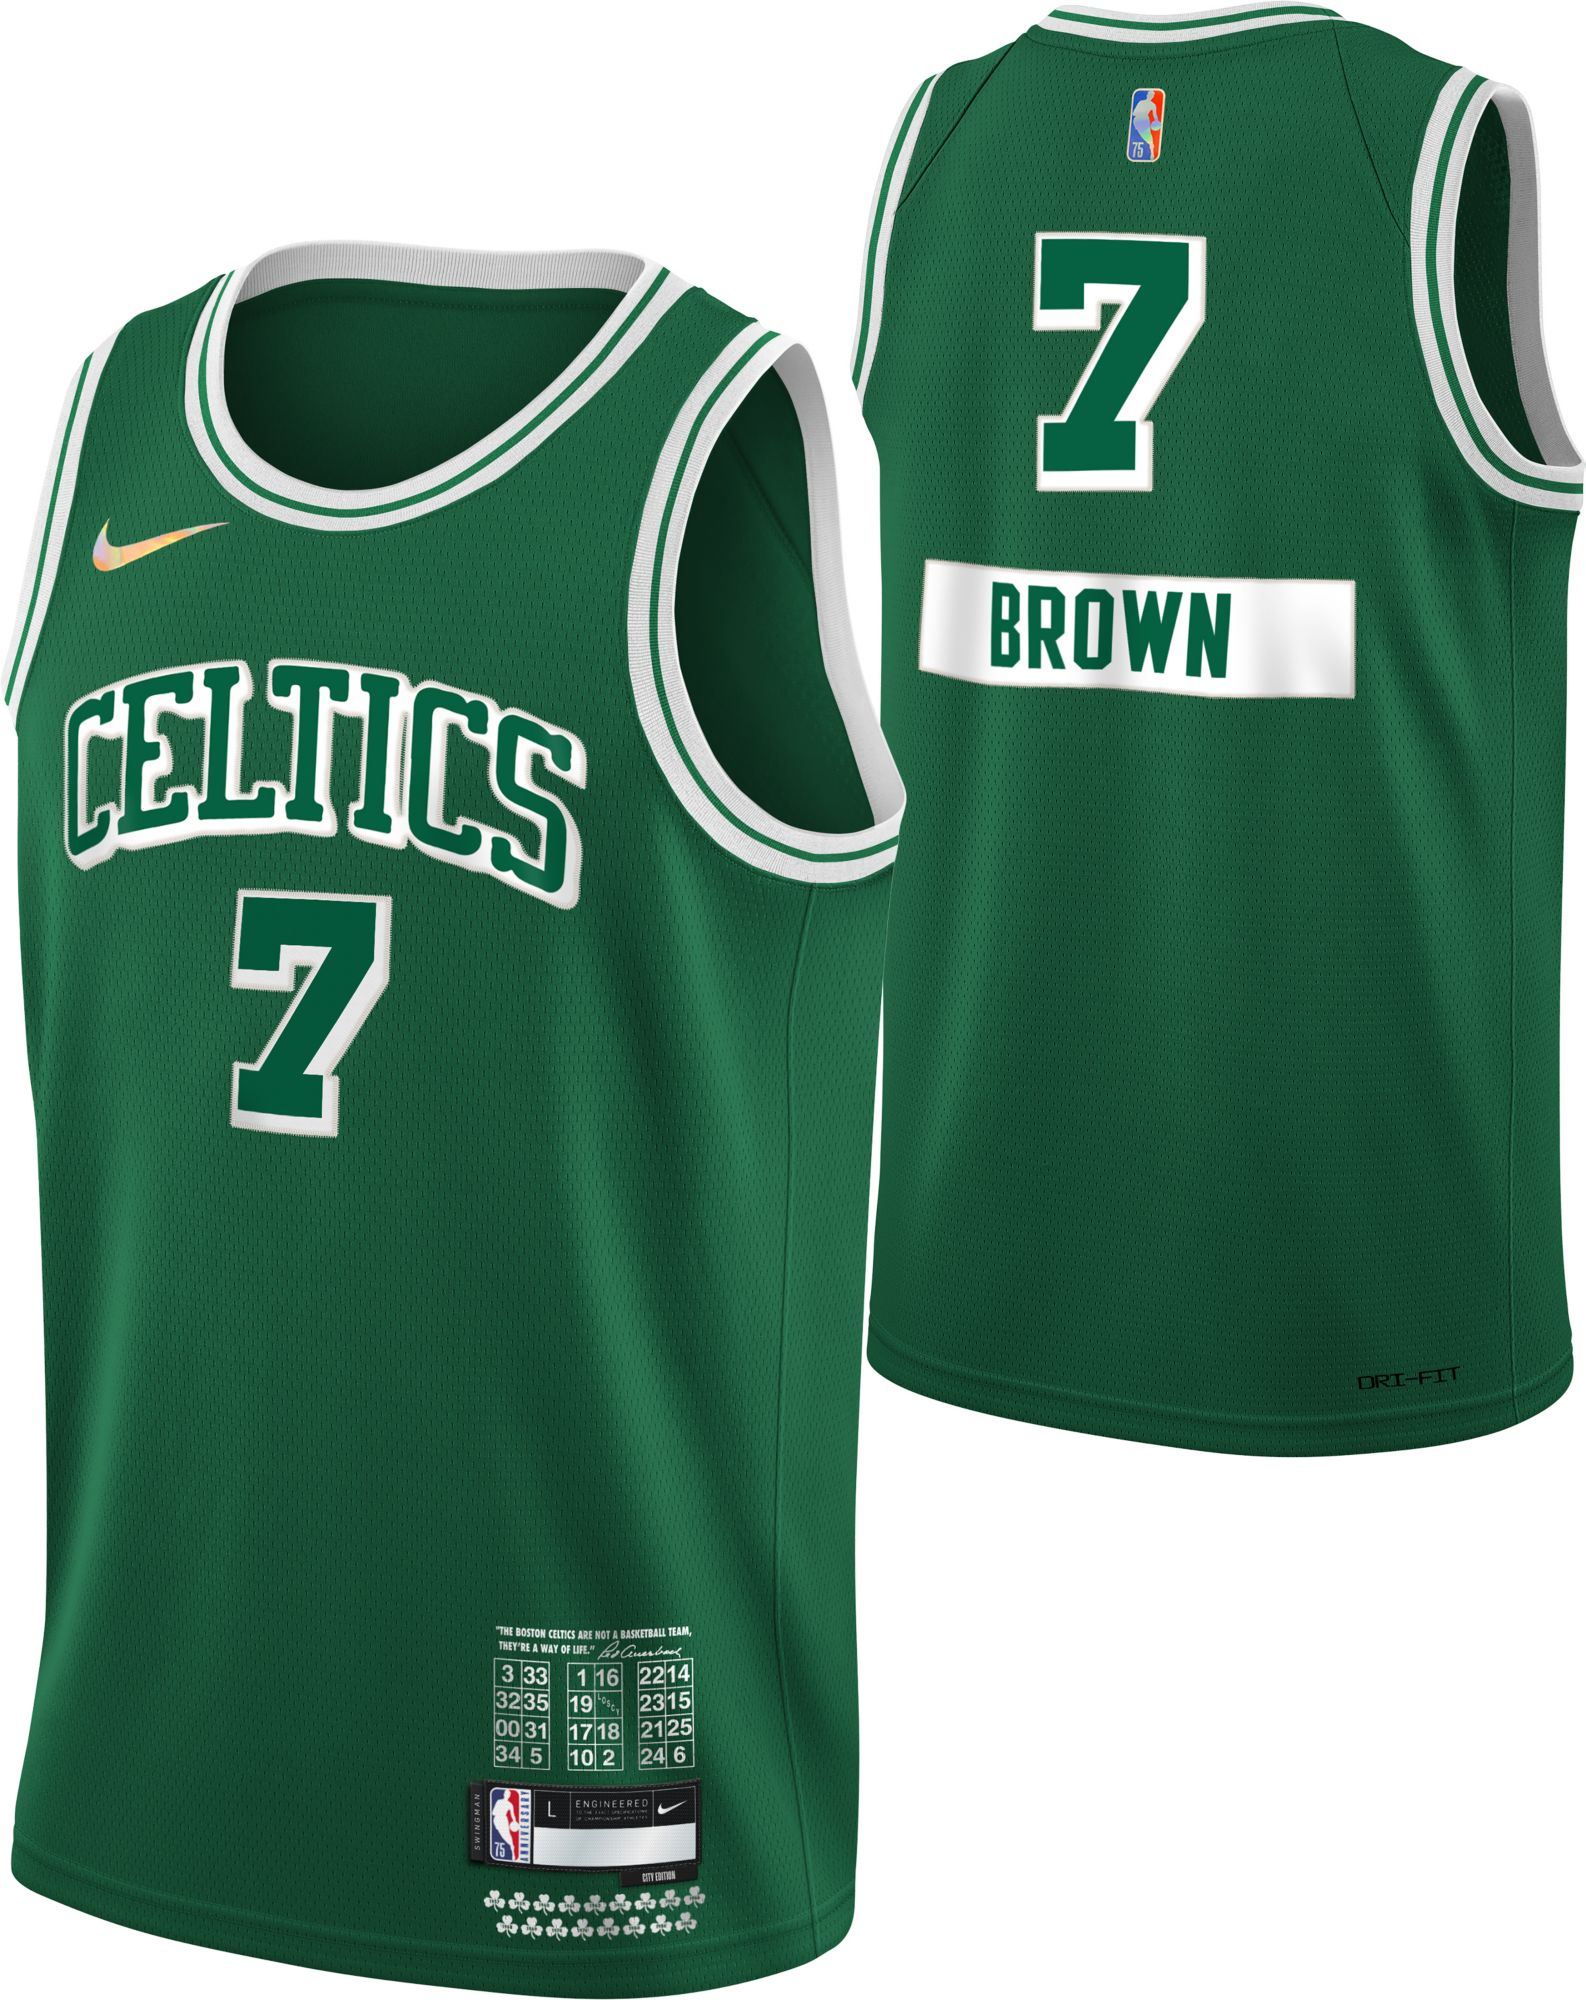 2021-22 Nike NBA City Edition Uniforms: Boston Celtics